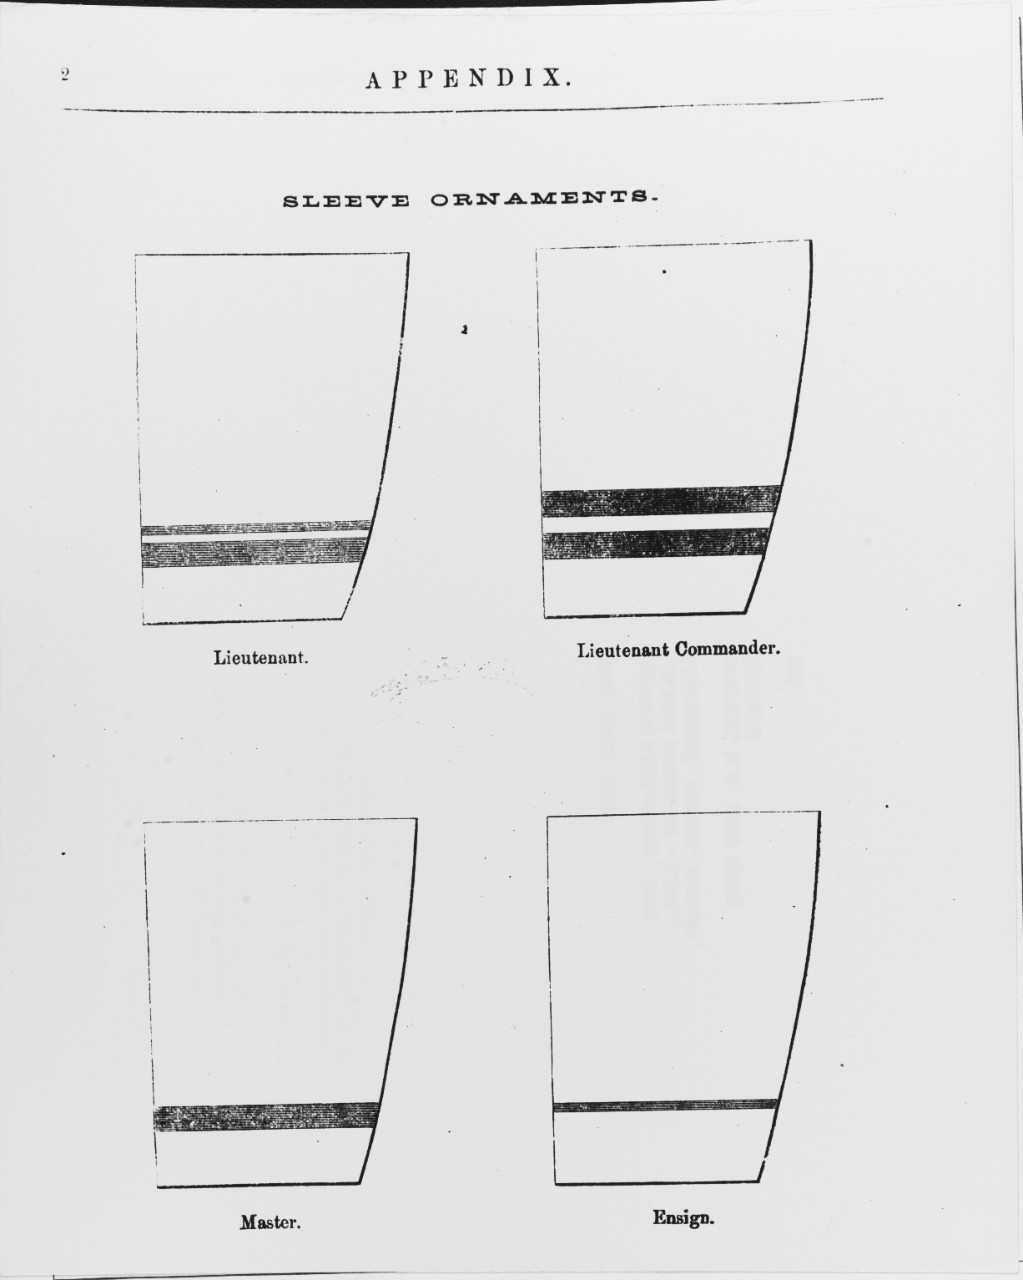 Uniform Regulations, 1862. Sleeve Ornaments for a Lieutenant, Lieutenant Commander, Master, and Ensign